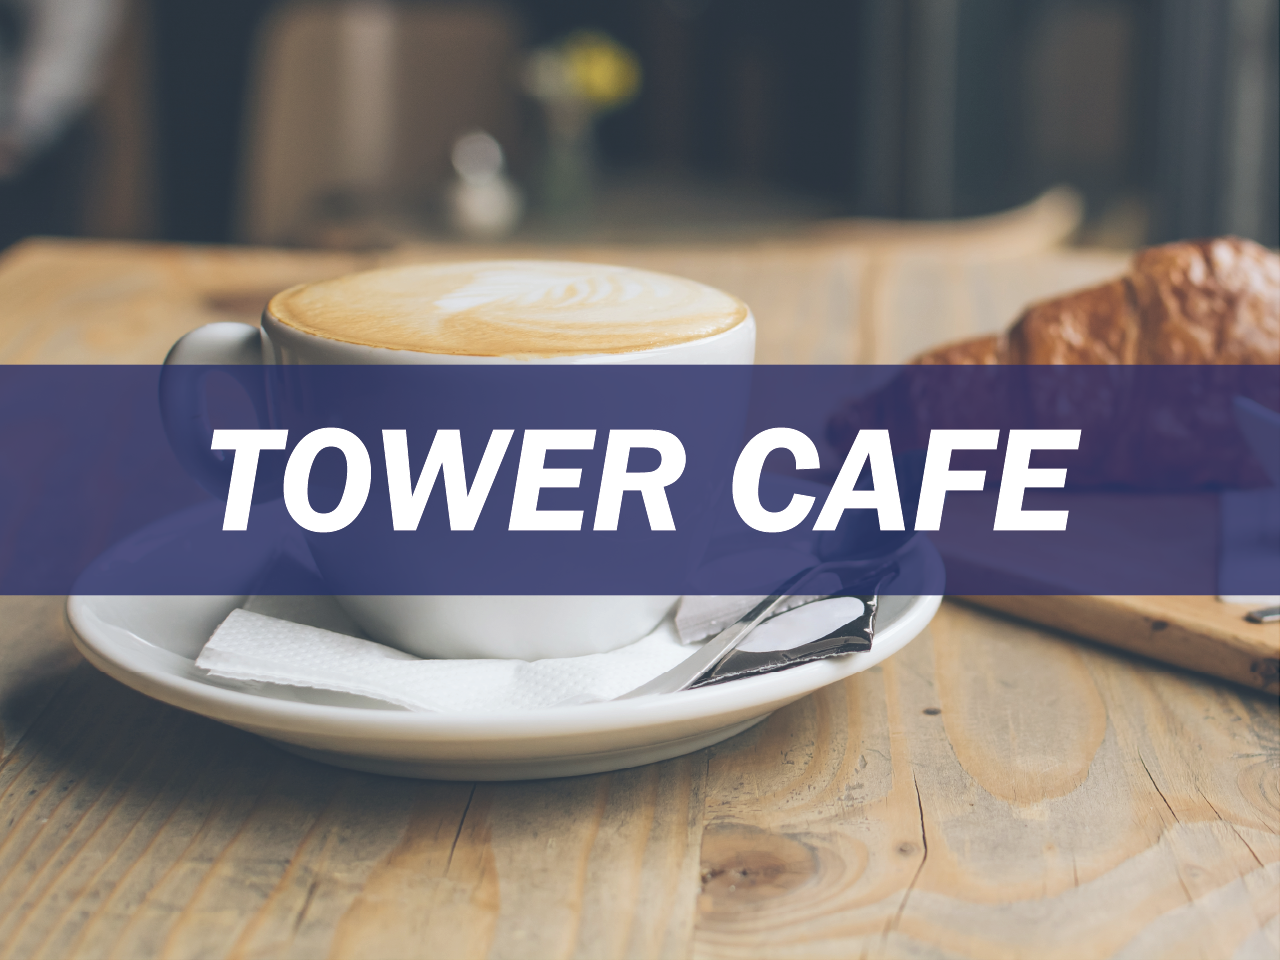 Tower Cafe Survey